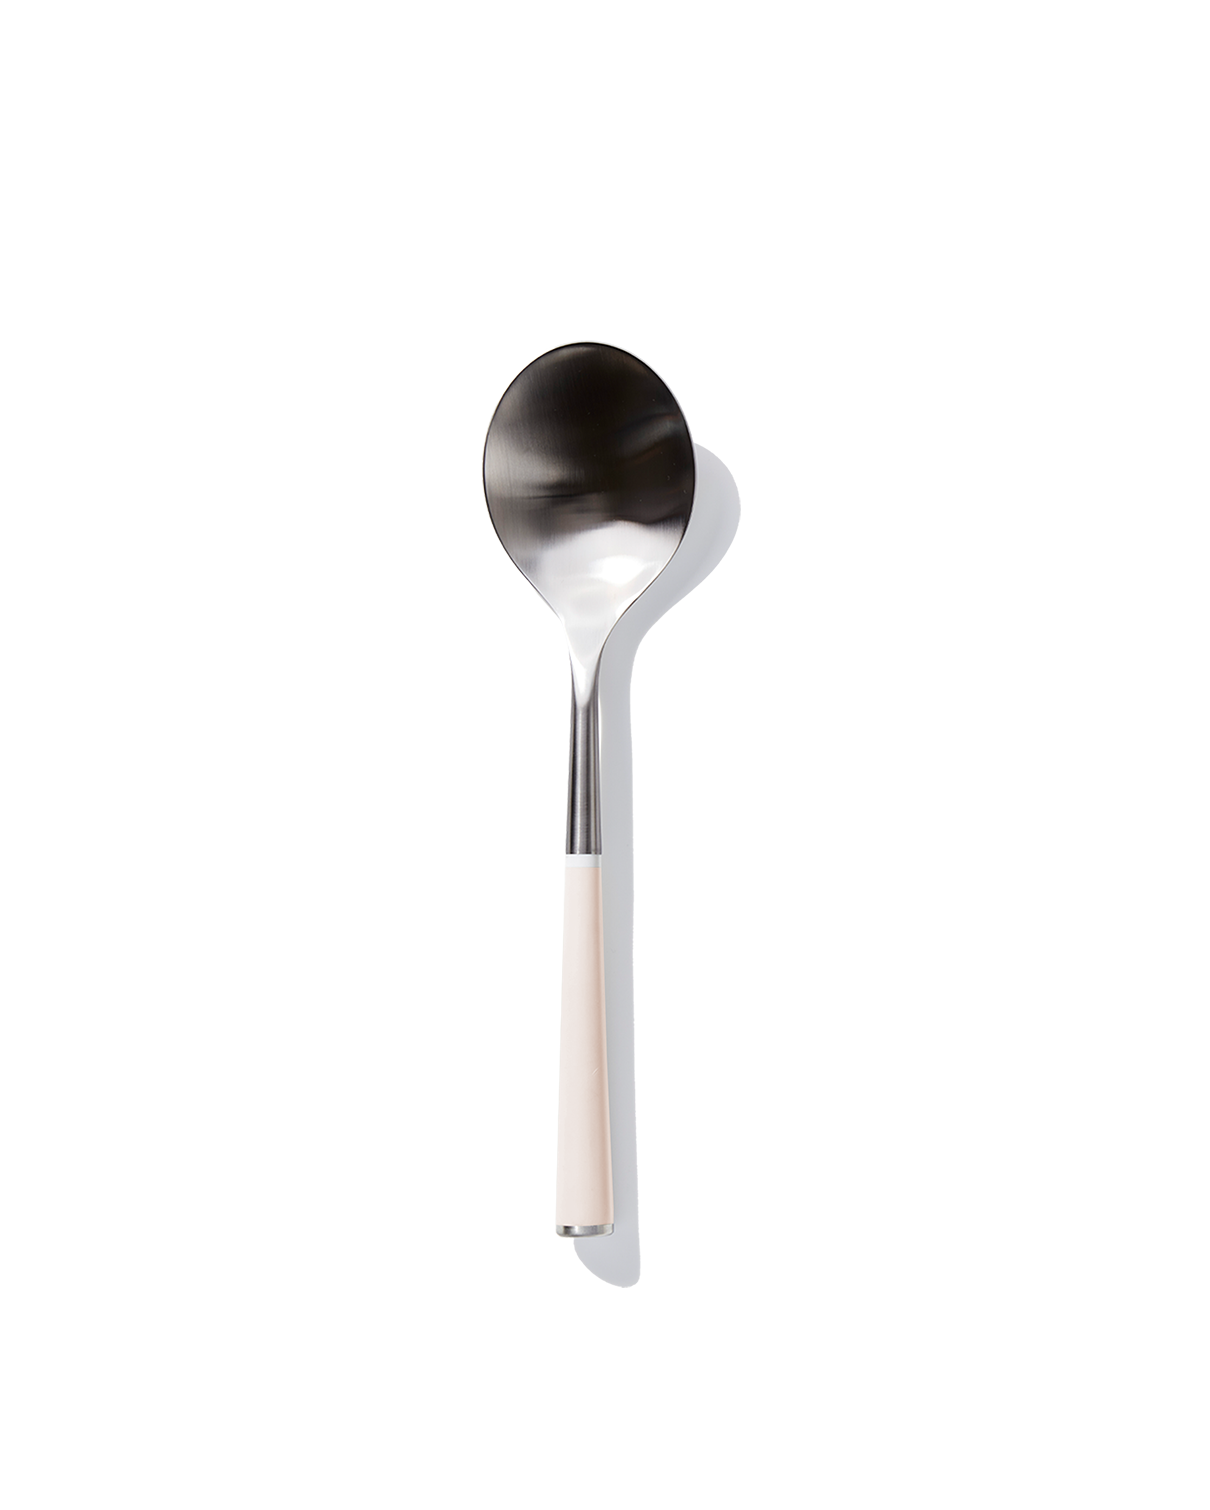 The Metal Spoon